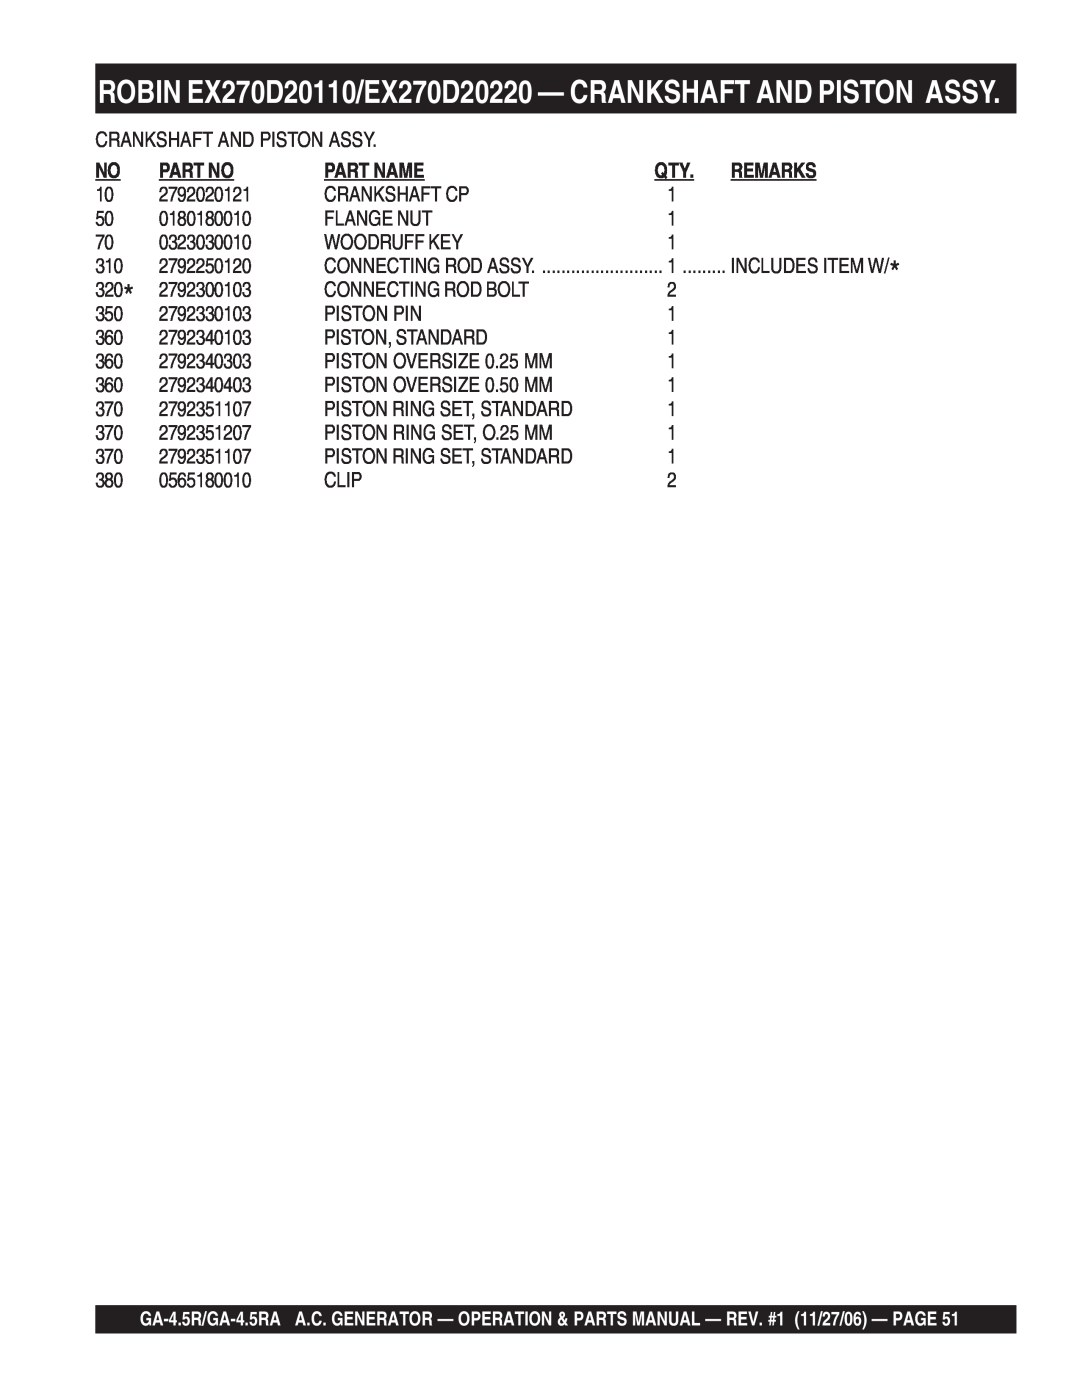 Multiquip GA4.5RA manual ROBIN EX270D20110/EX270D20220 - CRANKSHAFT AND PISTON ASSY, Part Name, Remarks 